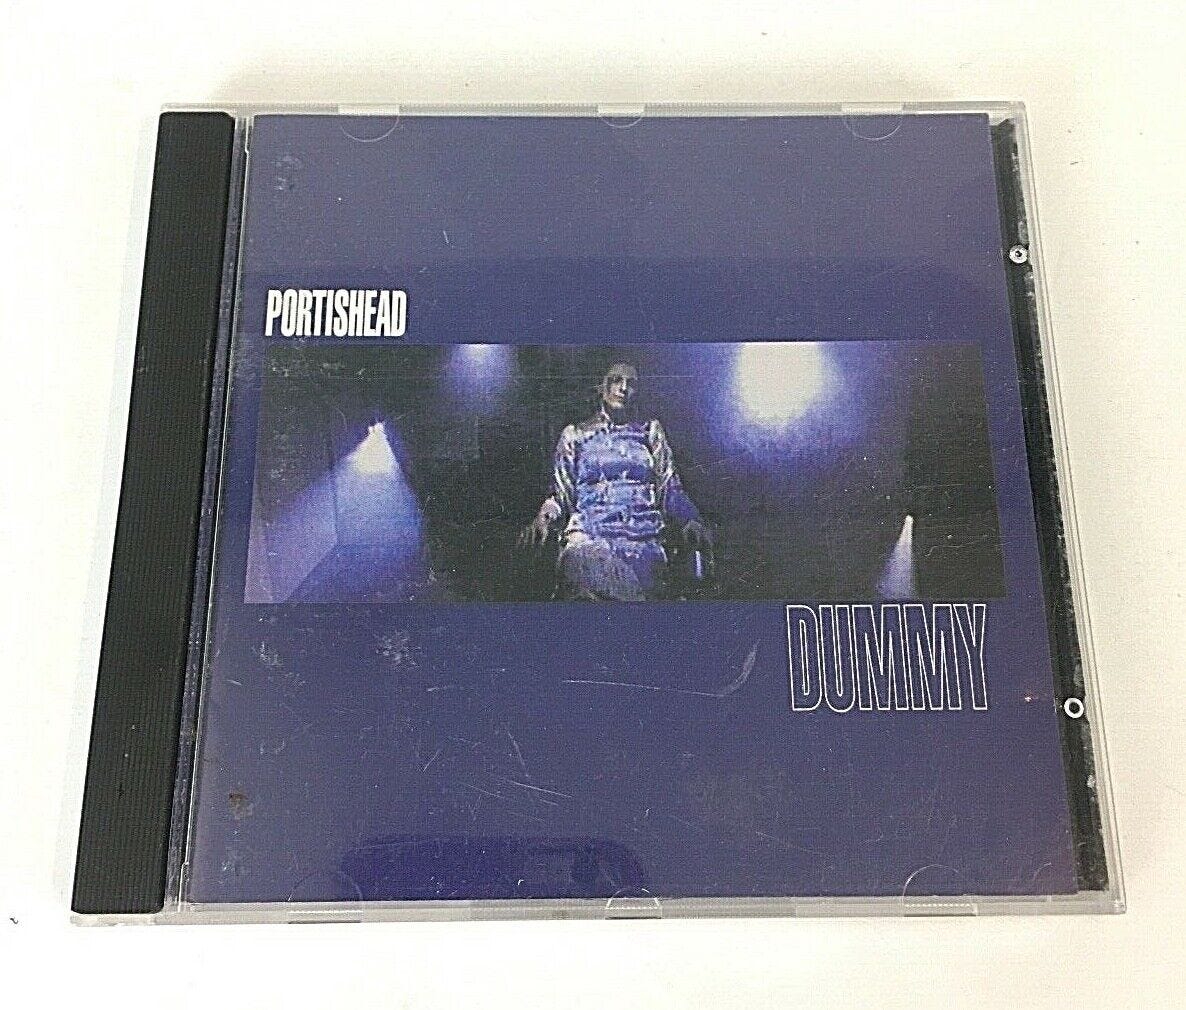 Portishead Dummy CD pre-owned 42282855329 | eBay